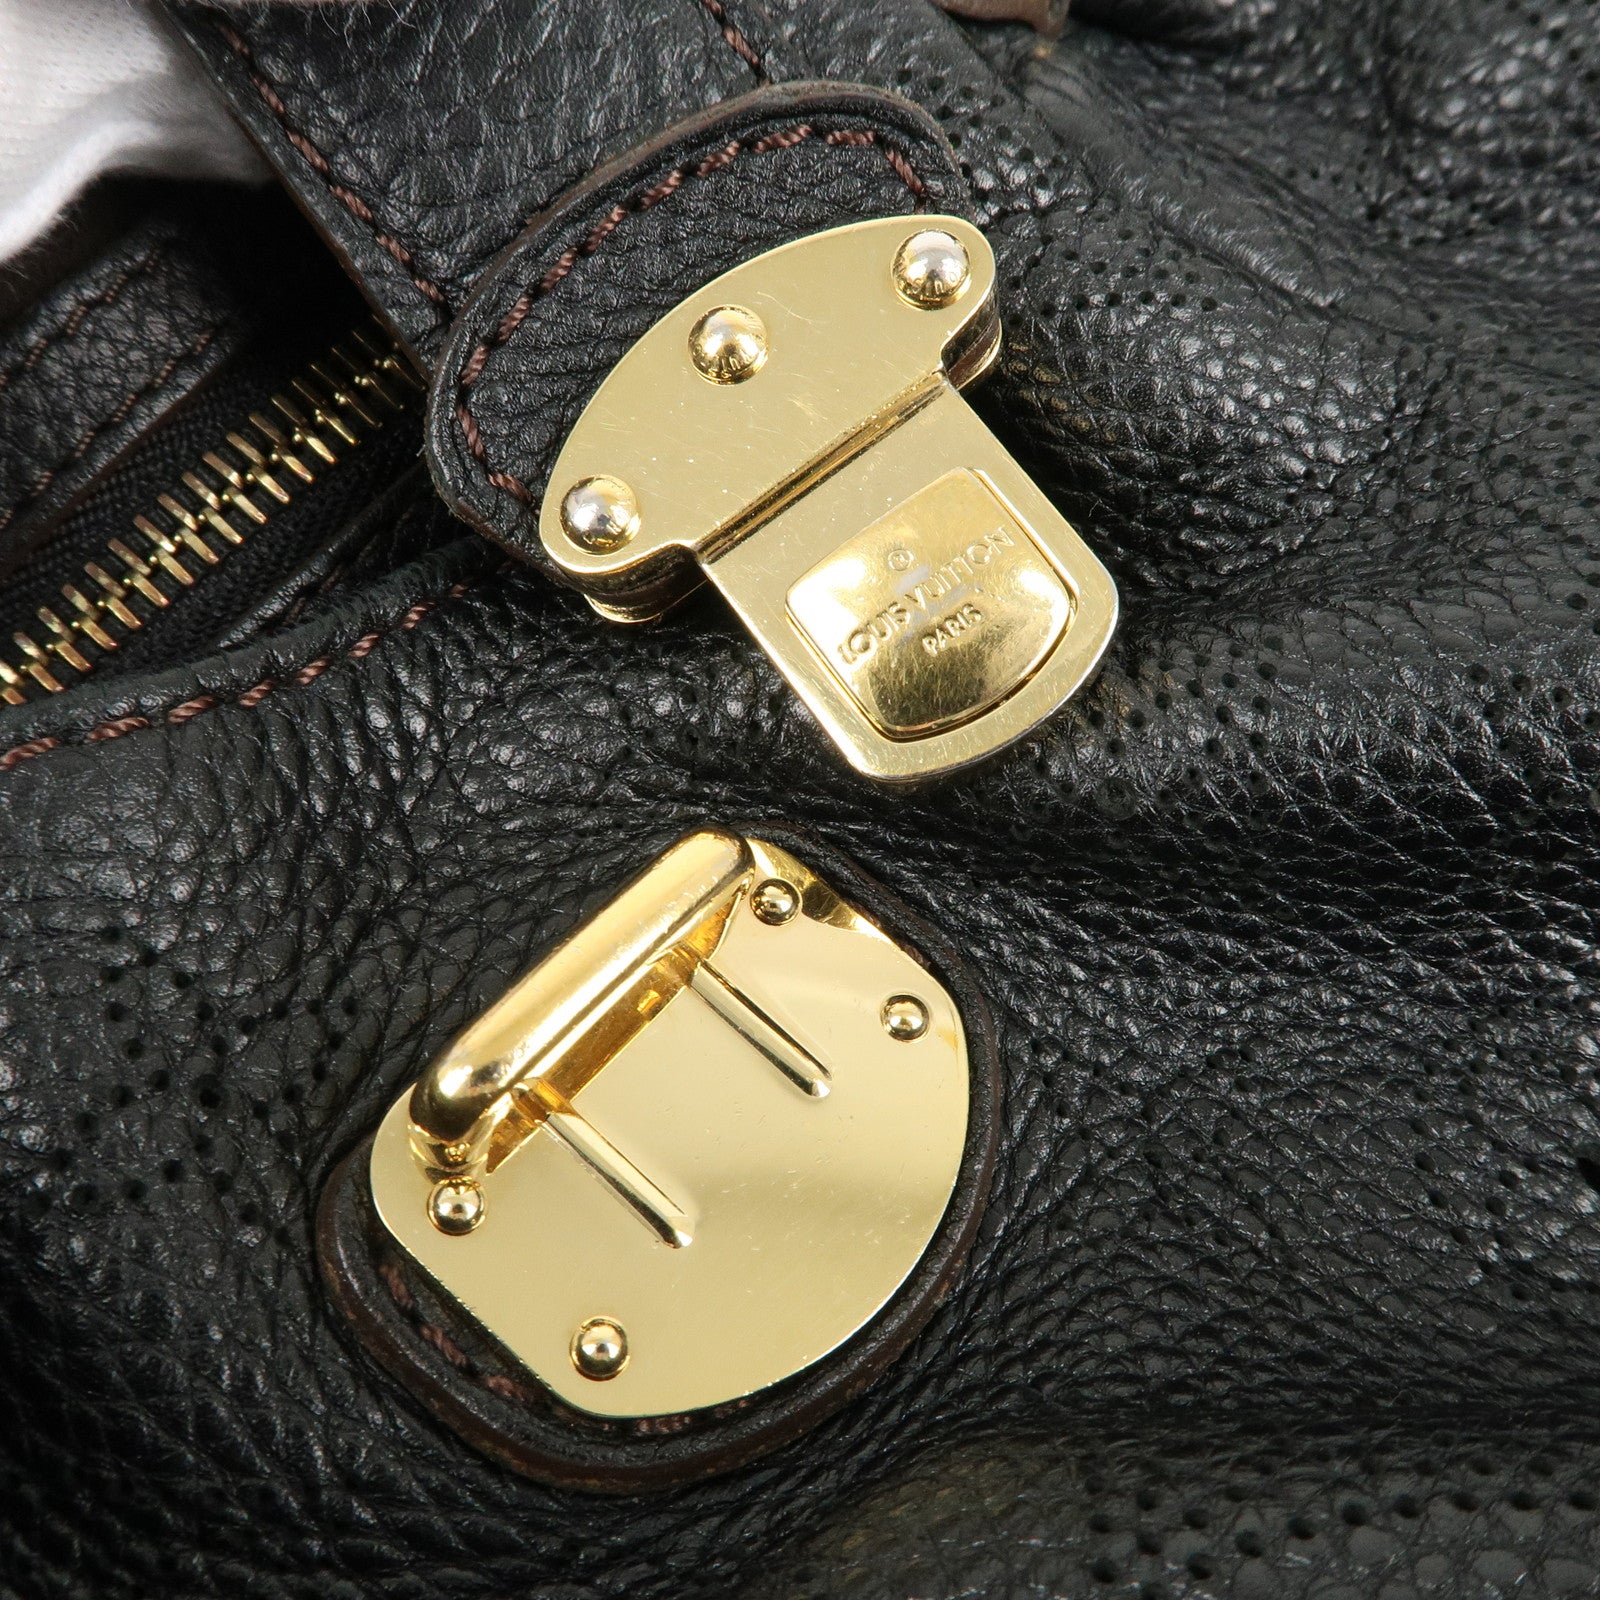 vuitton monogram mahina leather bag